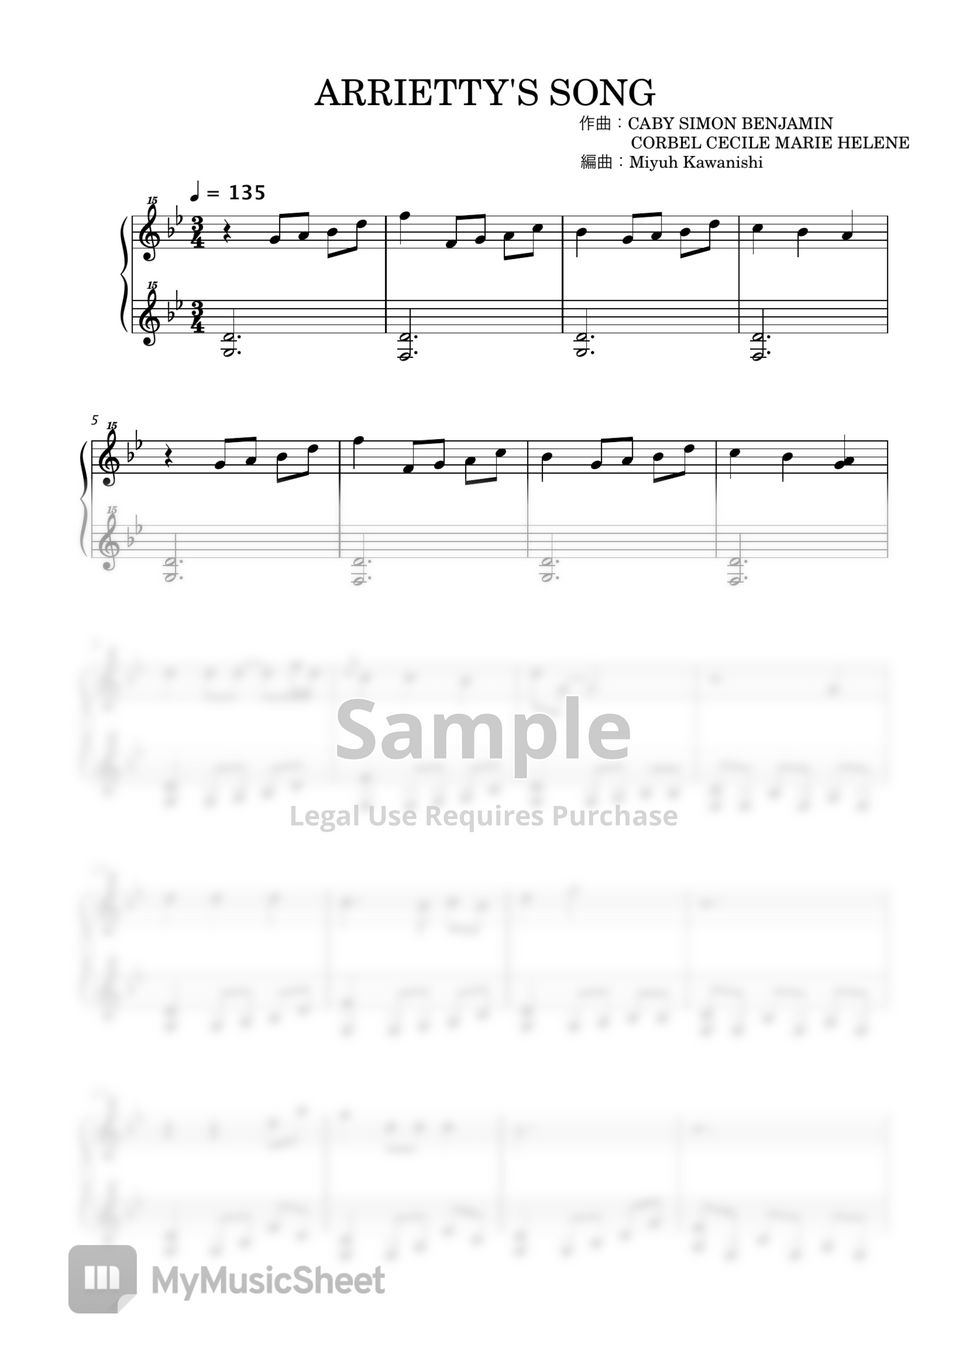 CORBEL CECILE MARIE HELENE - Arriettey's Song (toy piano / 32 keys / GHIBLI / The Secret World of Arrietty) by Miyuh　Kawanishi